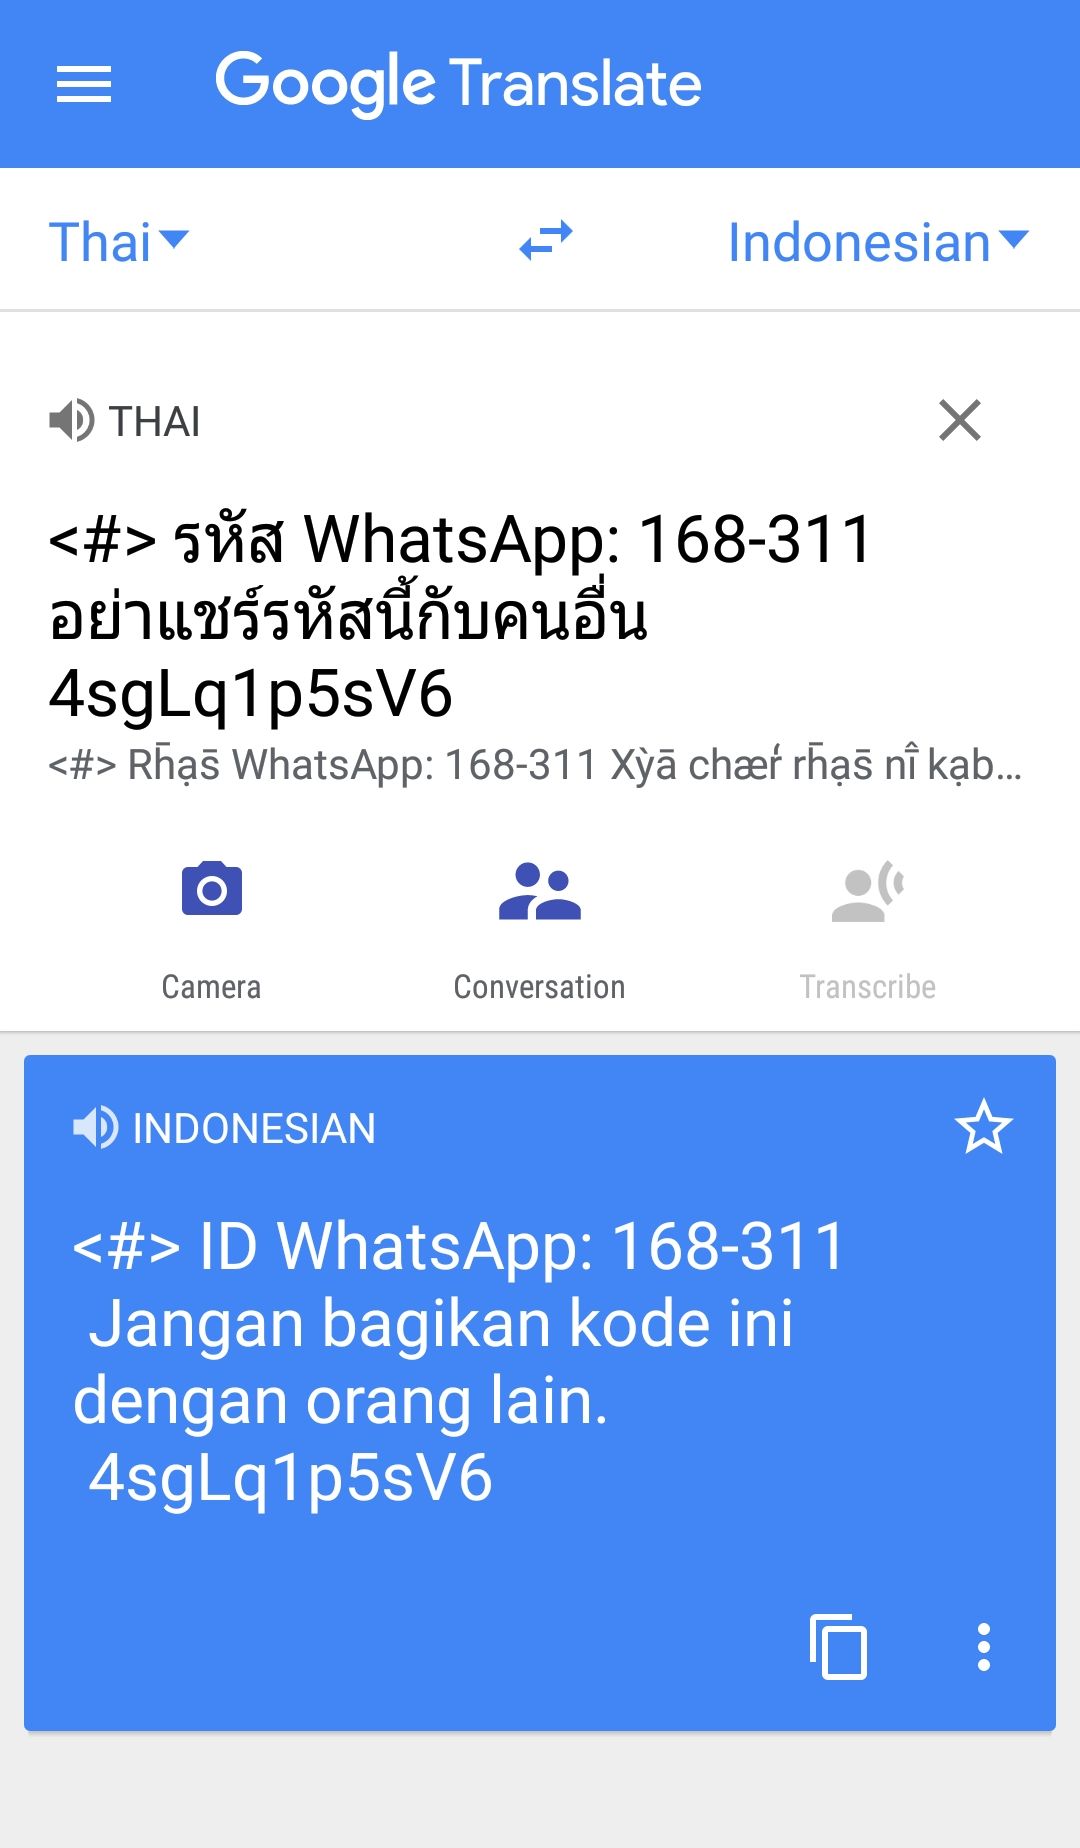 Pesan bahasa Thailand dari Whatsapp yang diartikan ke dalam Bahasa Indonesia